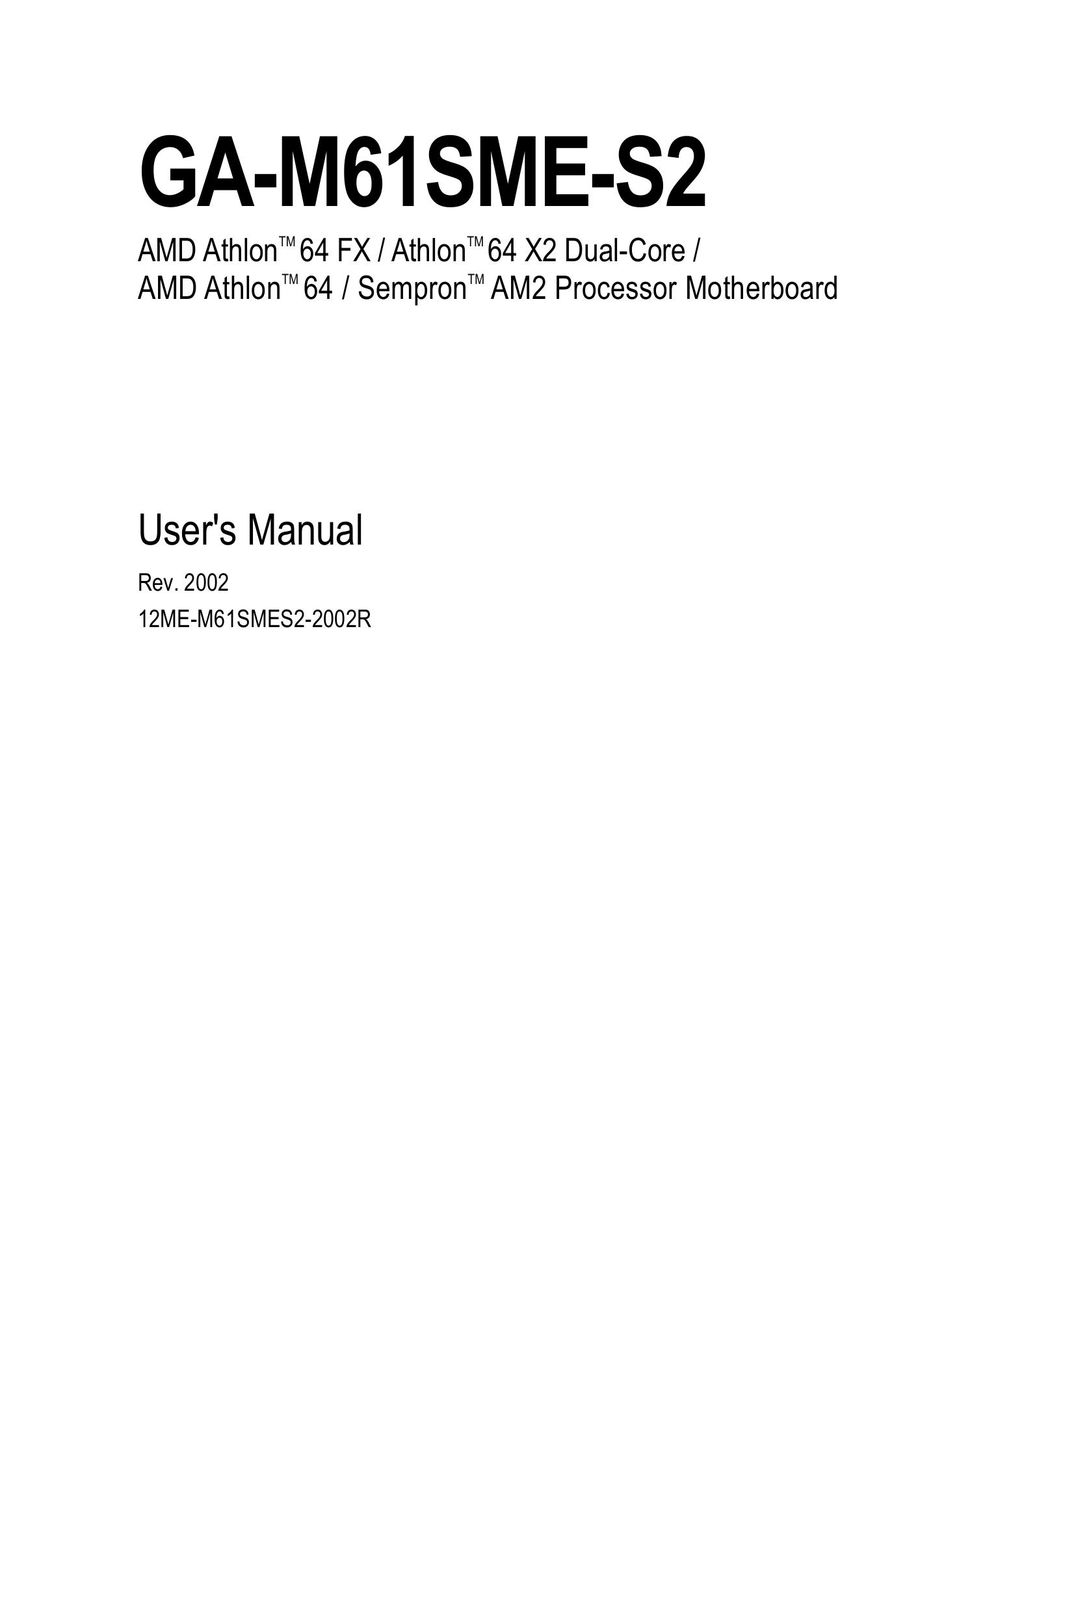 AMD GA-M61SME-S2 Computer Hardware User Manual